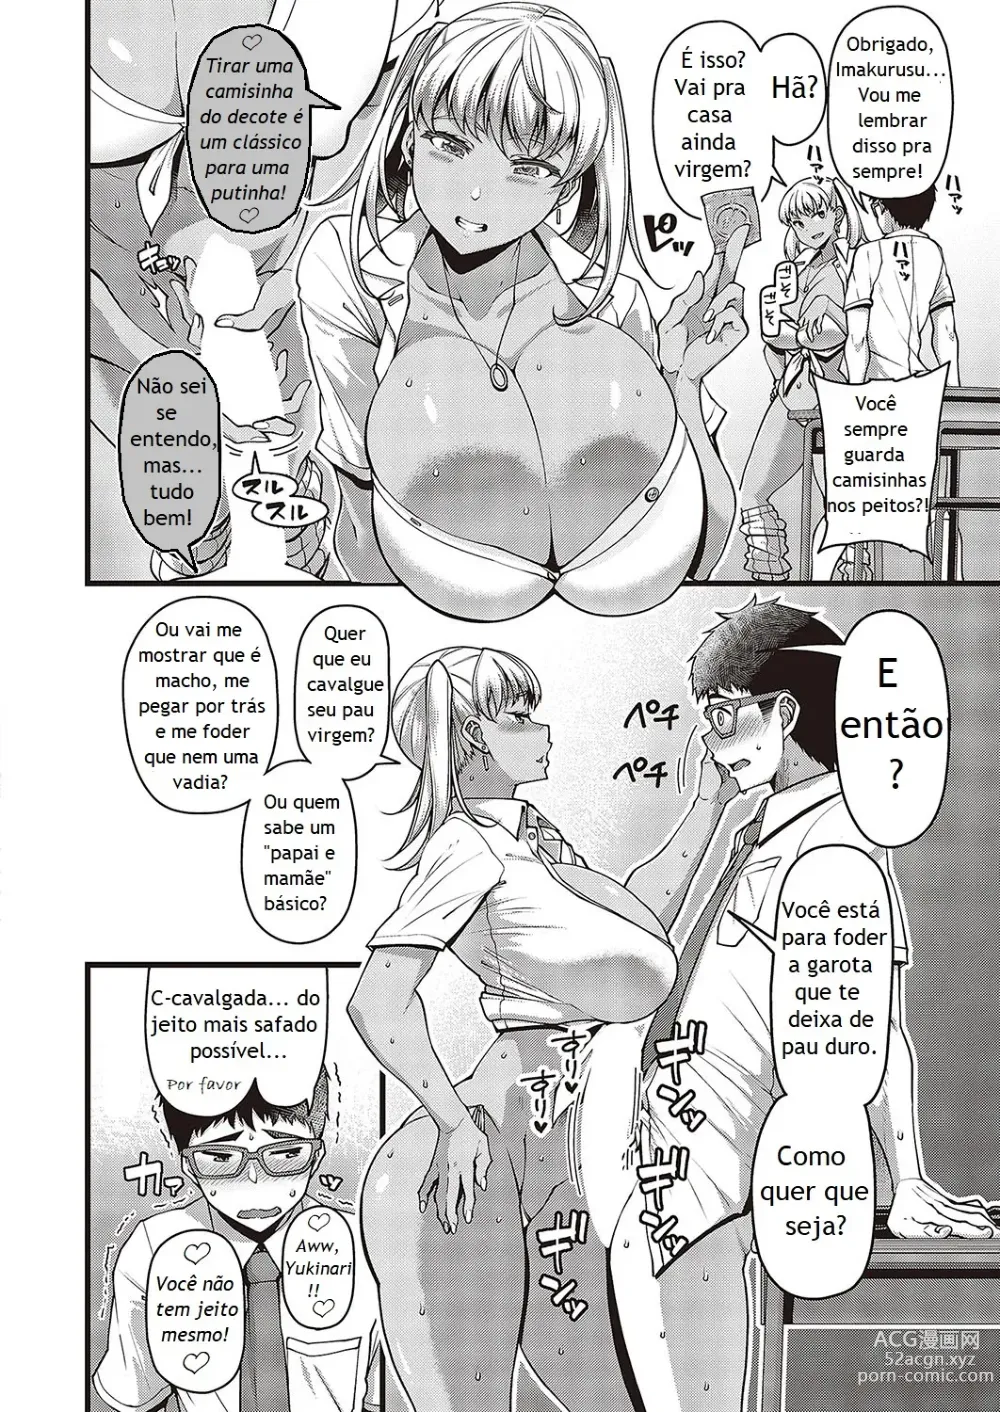 Page 12 of manga Way to Go!